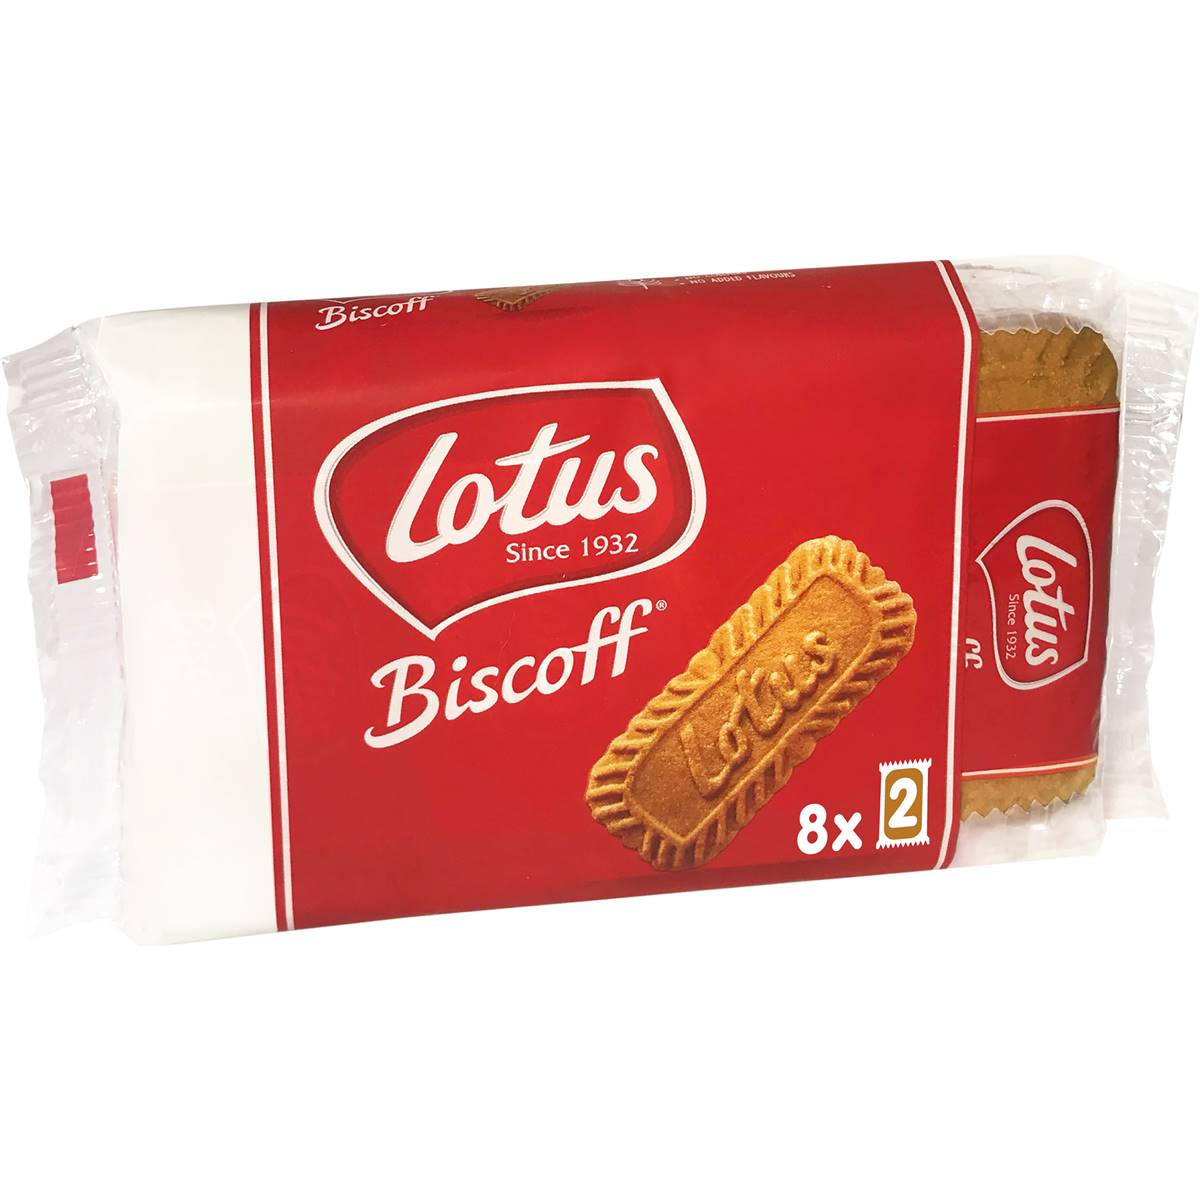 Lotus Biscoff Biscuit 8 pack